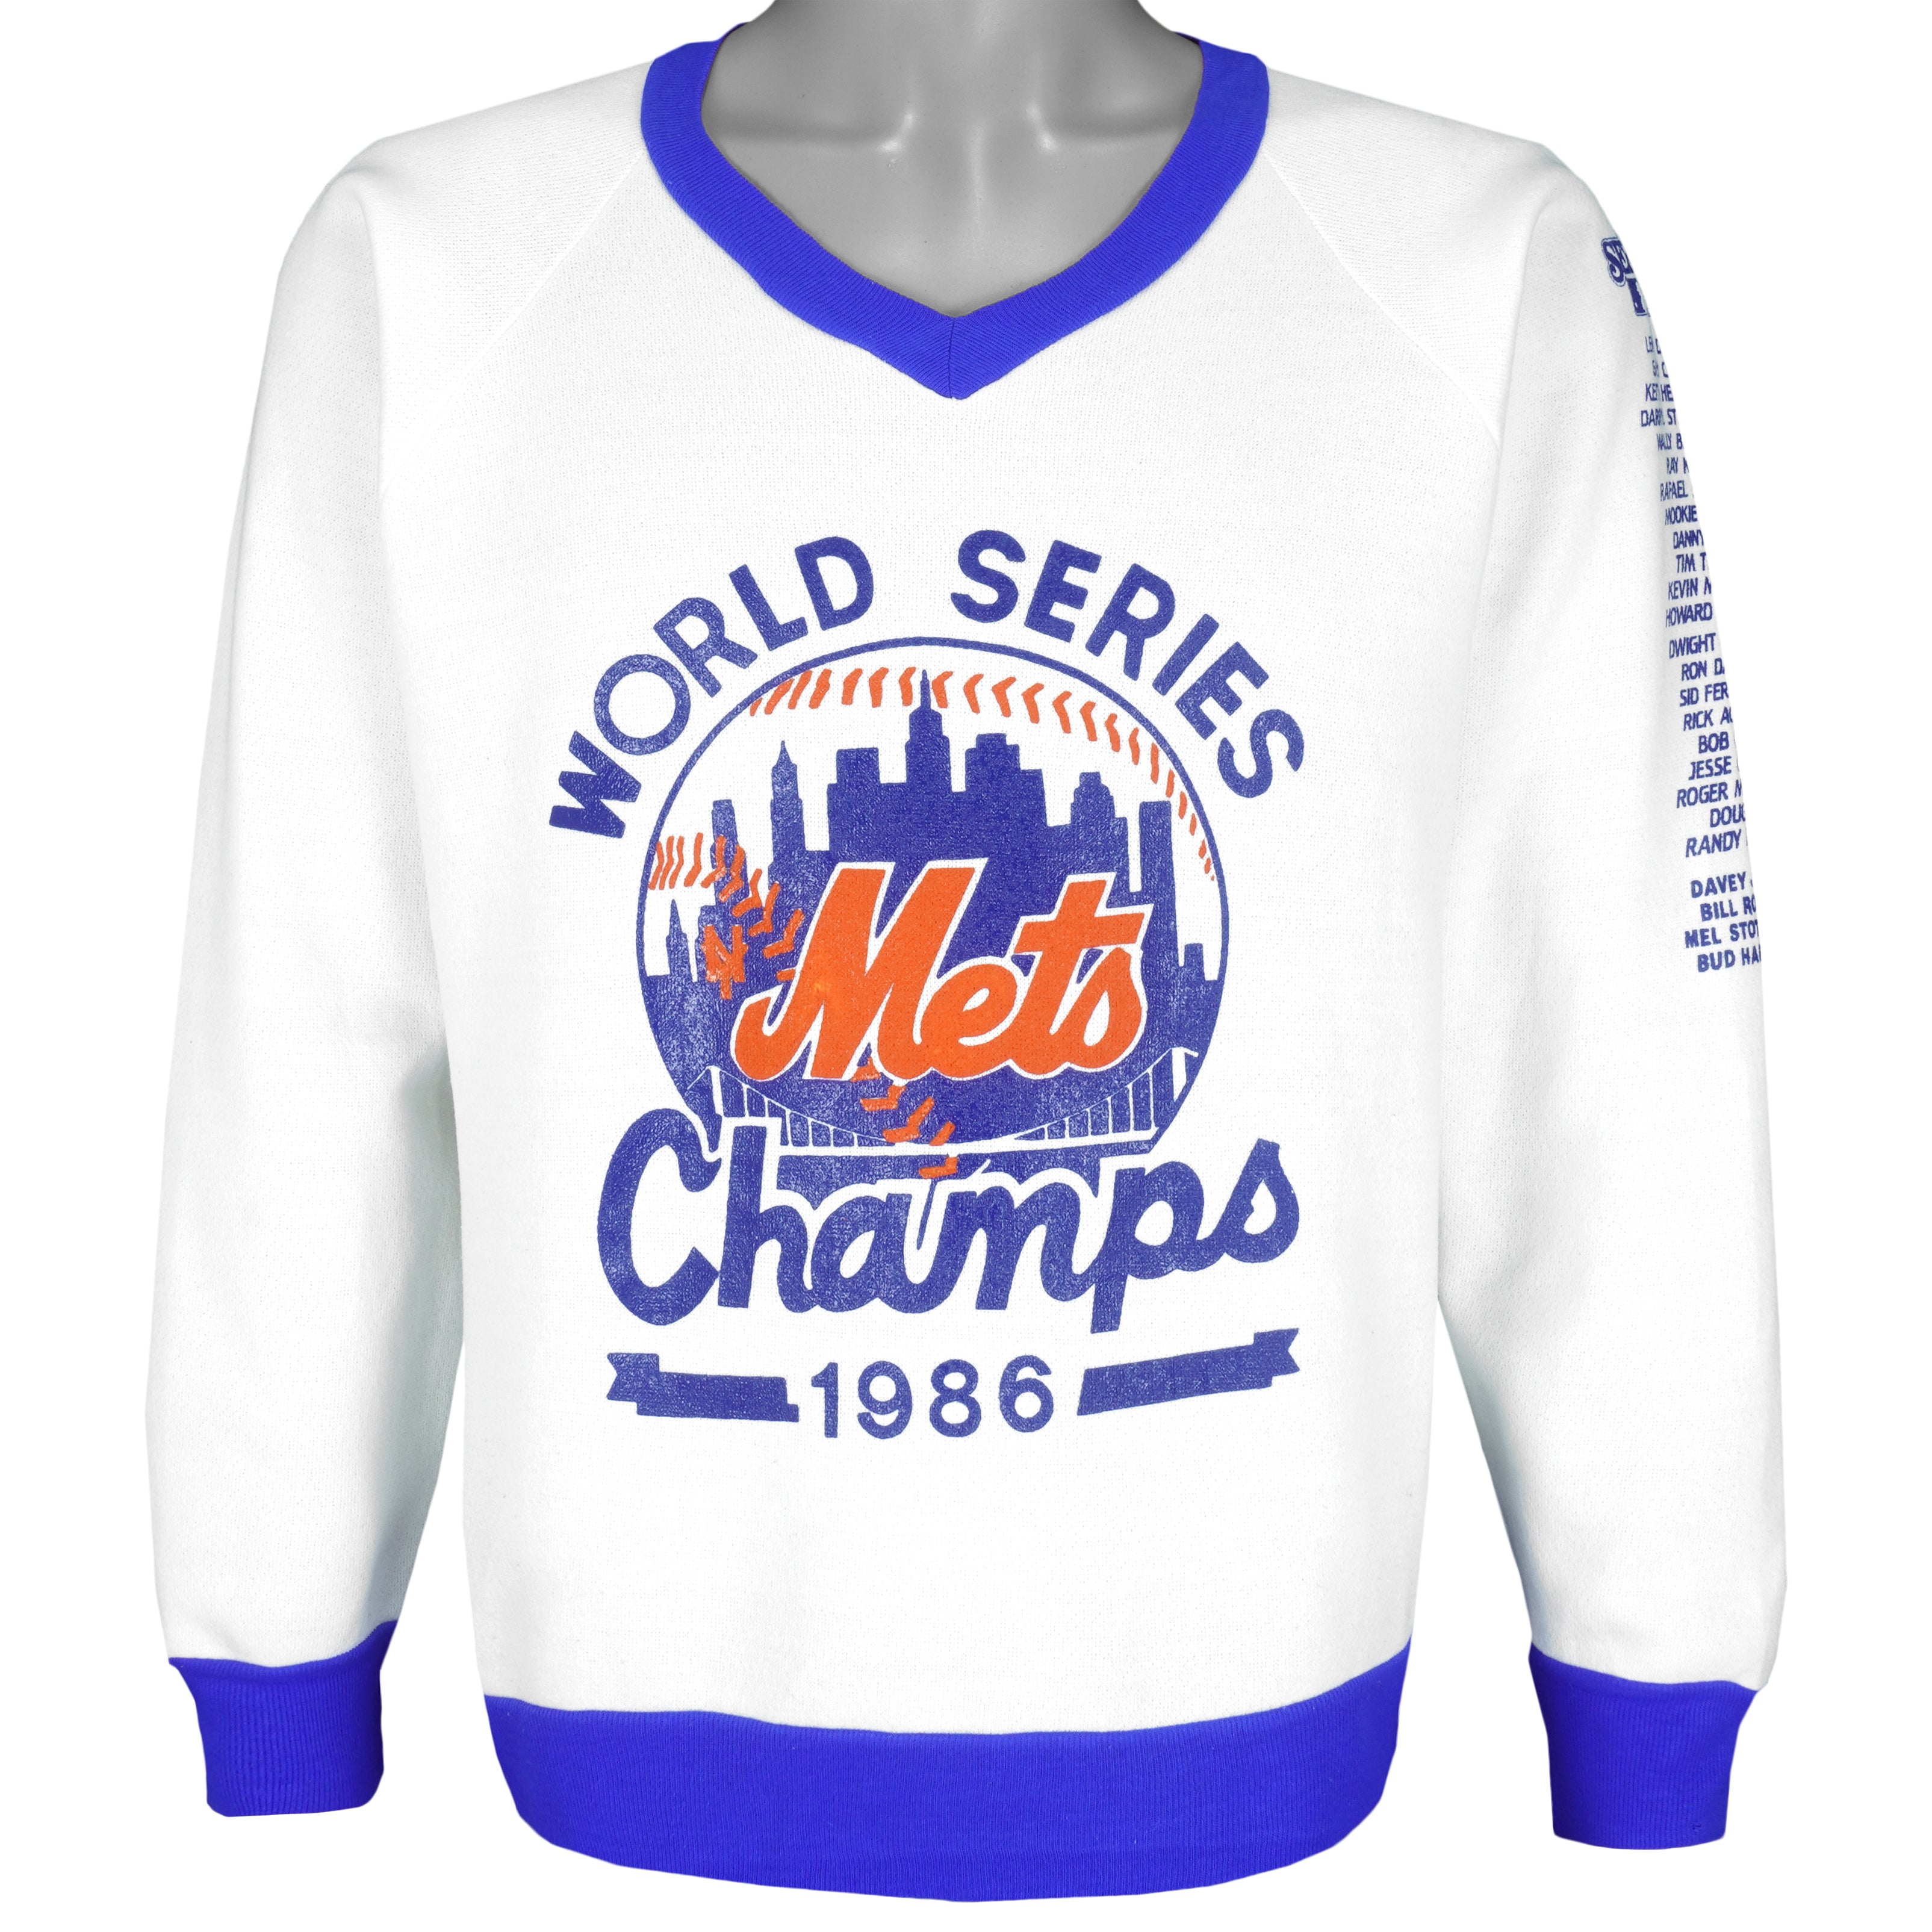 Vintage MLB - New York Mets Crew Neck Sweatshirt 1986 Small